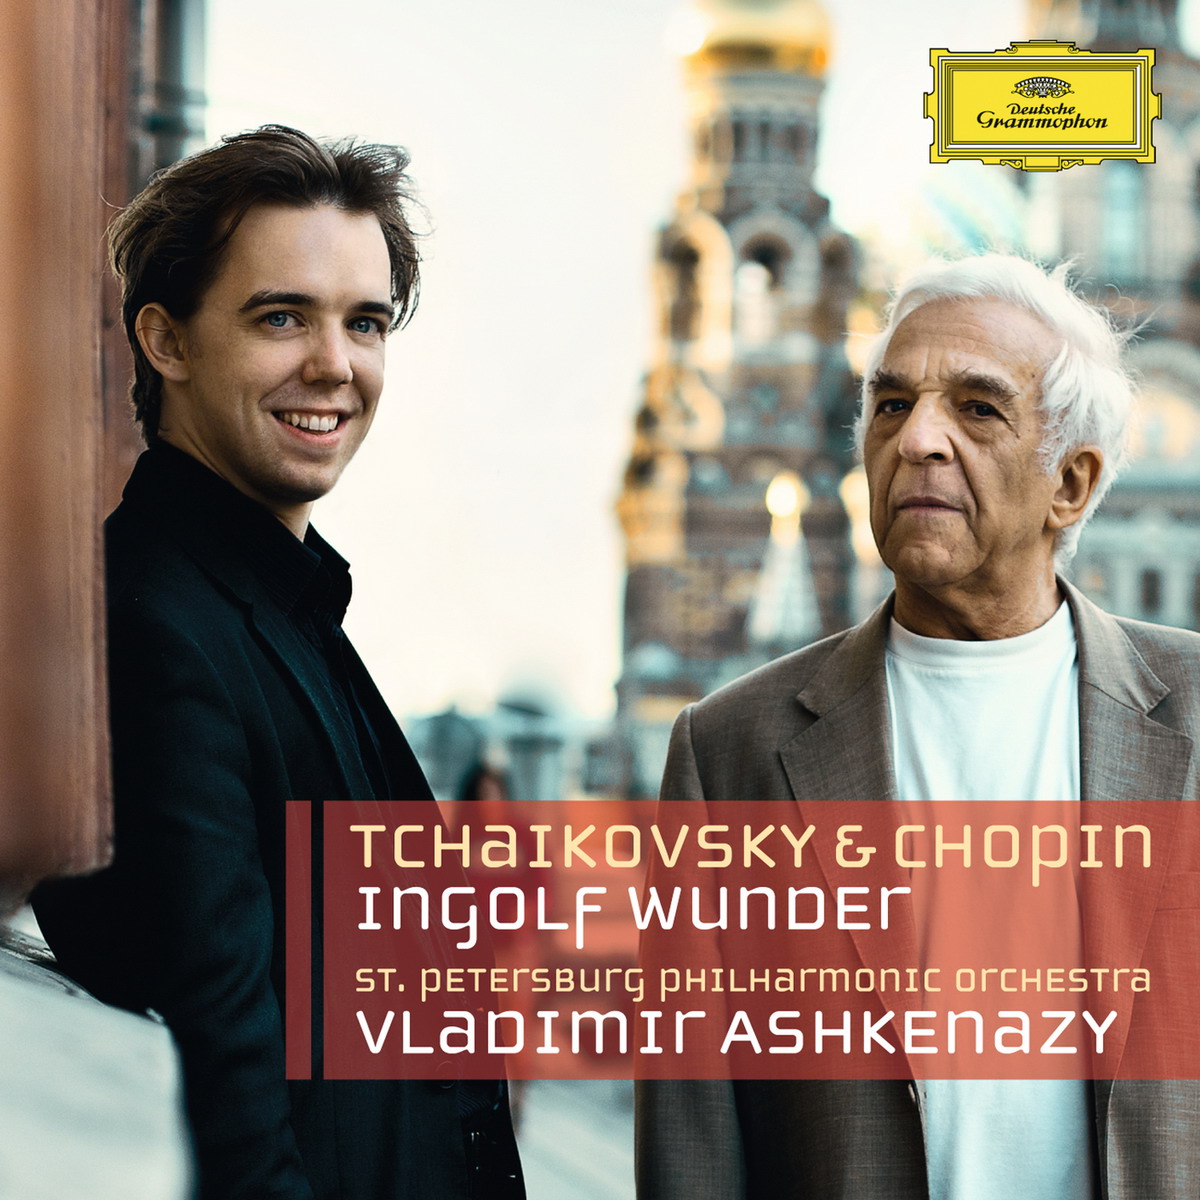 Ingolf Wunder, St. Petersburg Philharmonic Orchestra & Vladimir Ashkenazy - Tchaikovsky & Chopin (2014) [e-Onkyo FLAC 24bit/96kHz]